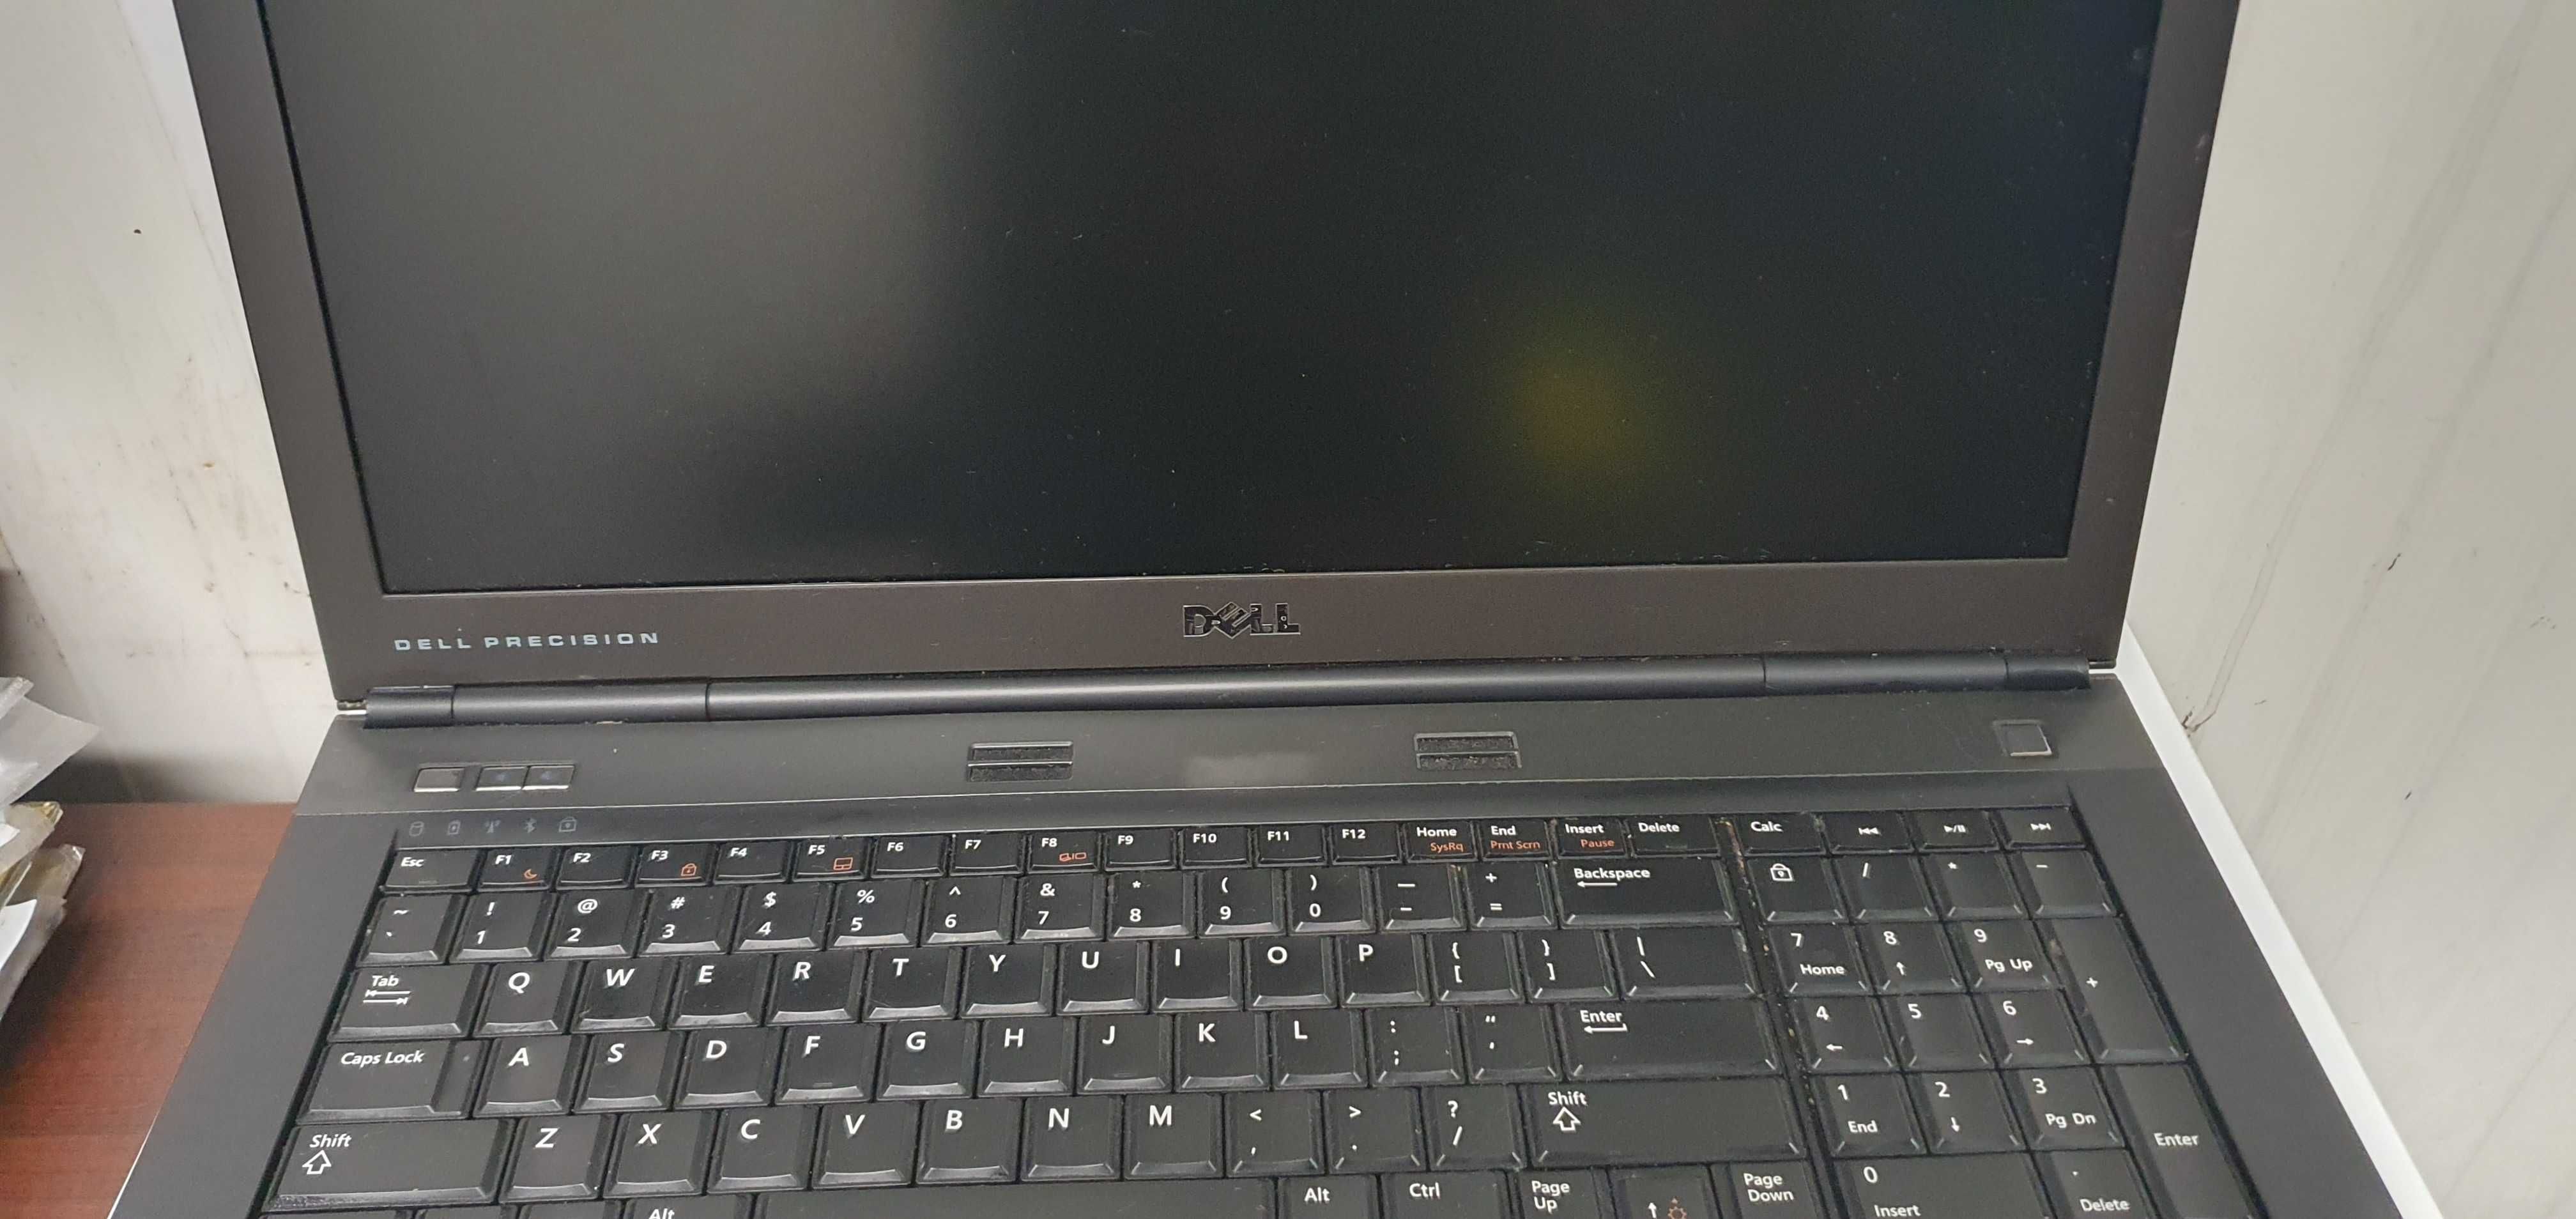 Laptop Dell M6600